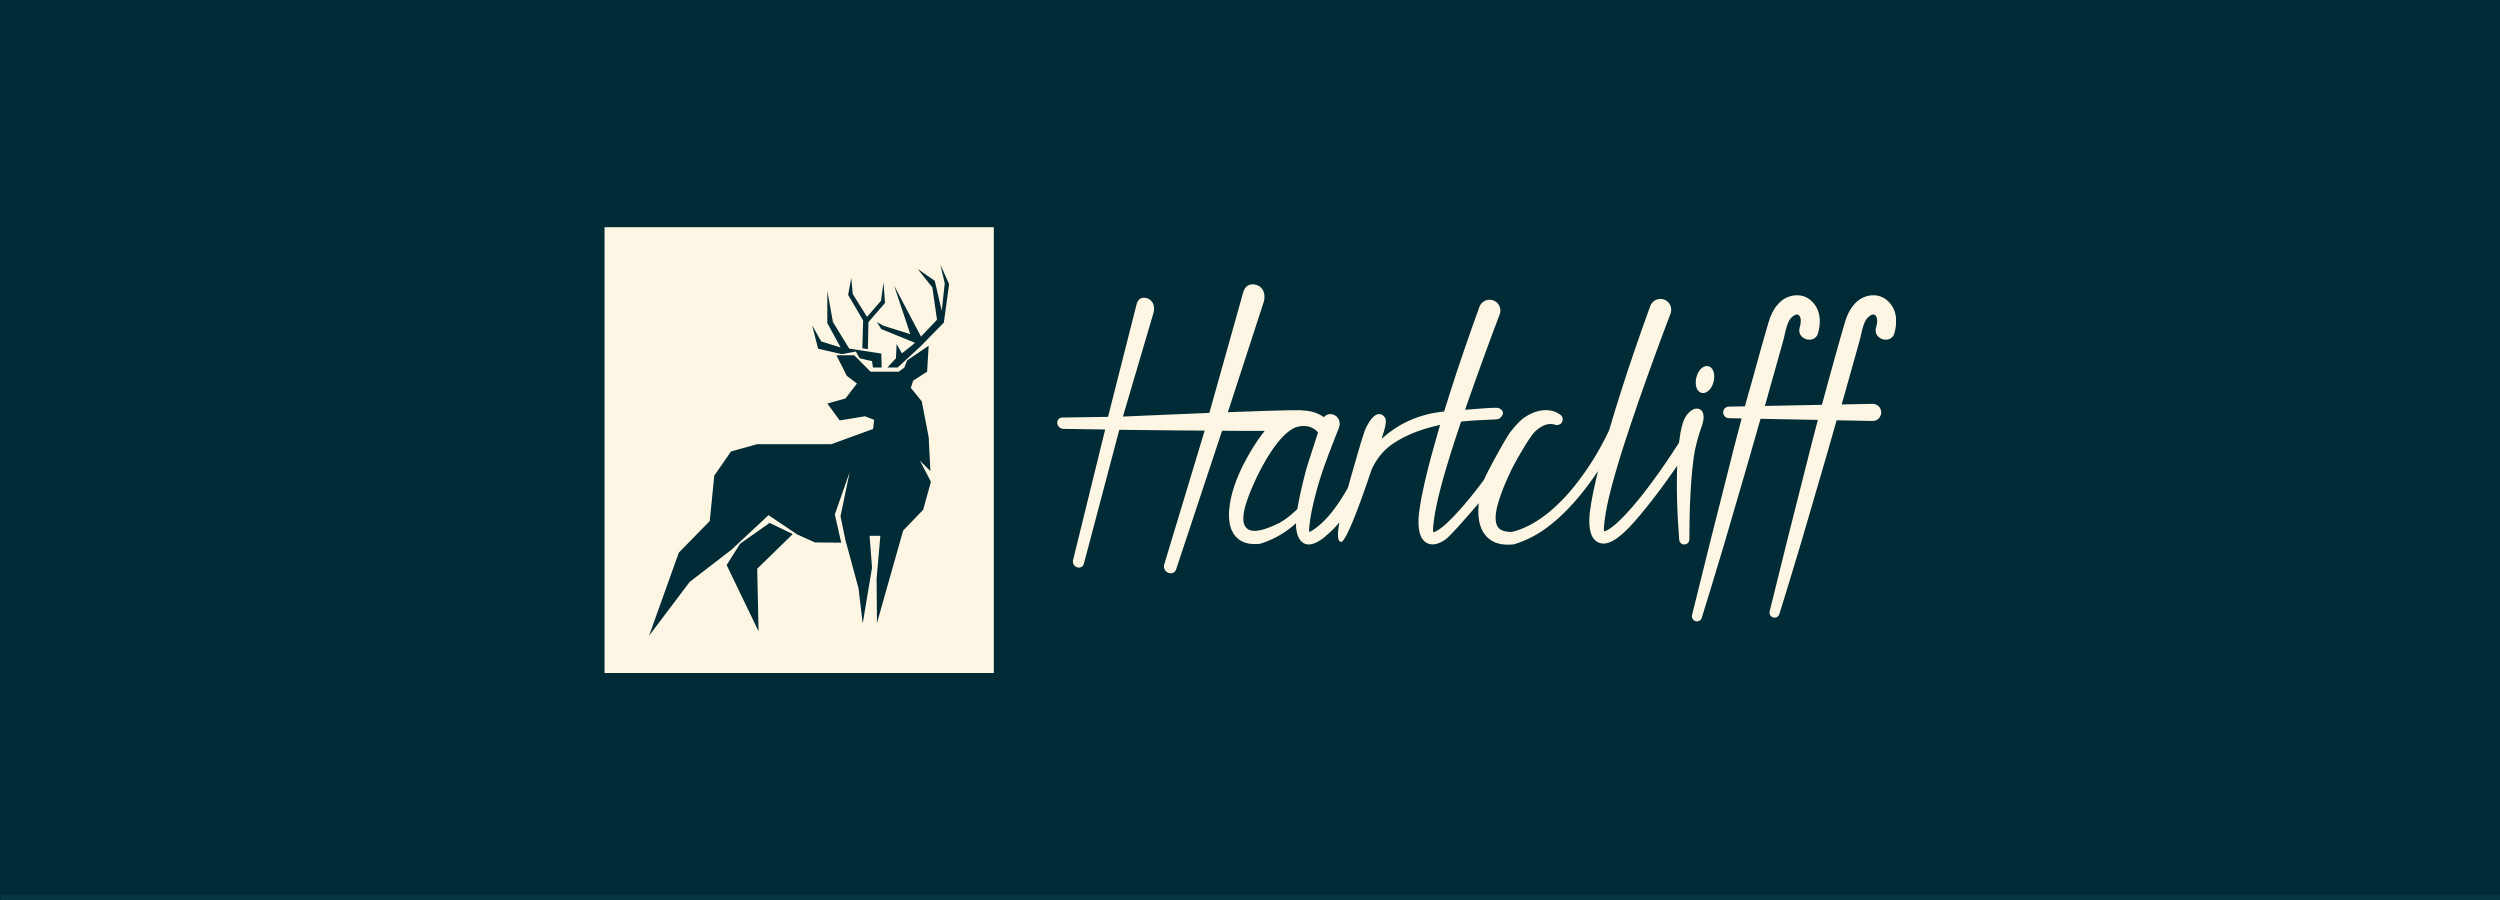 Full Hartcliff logo